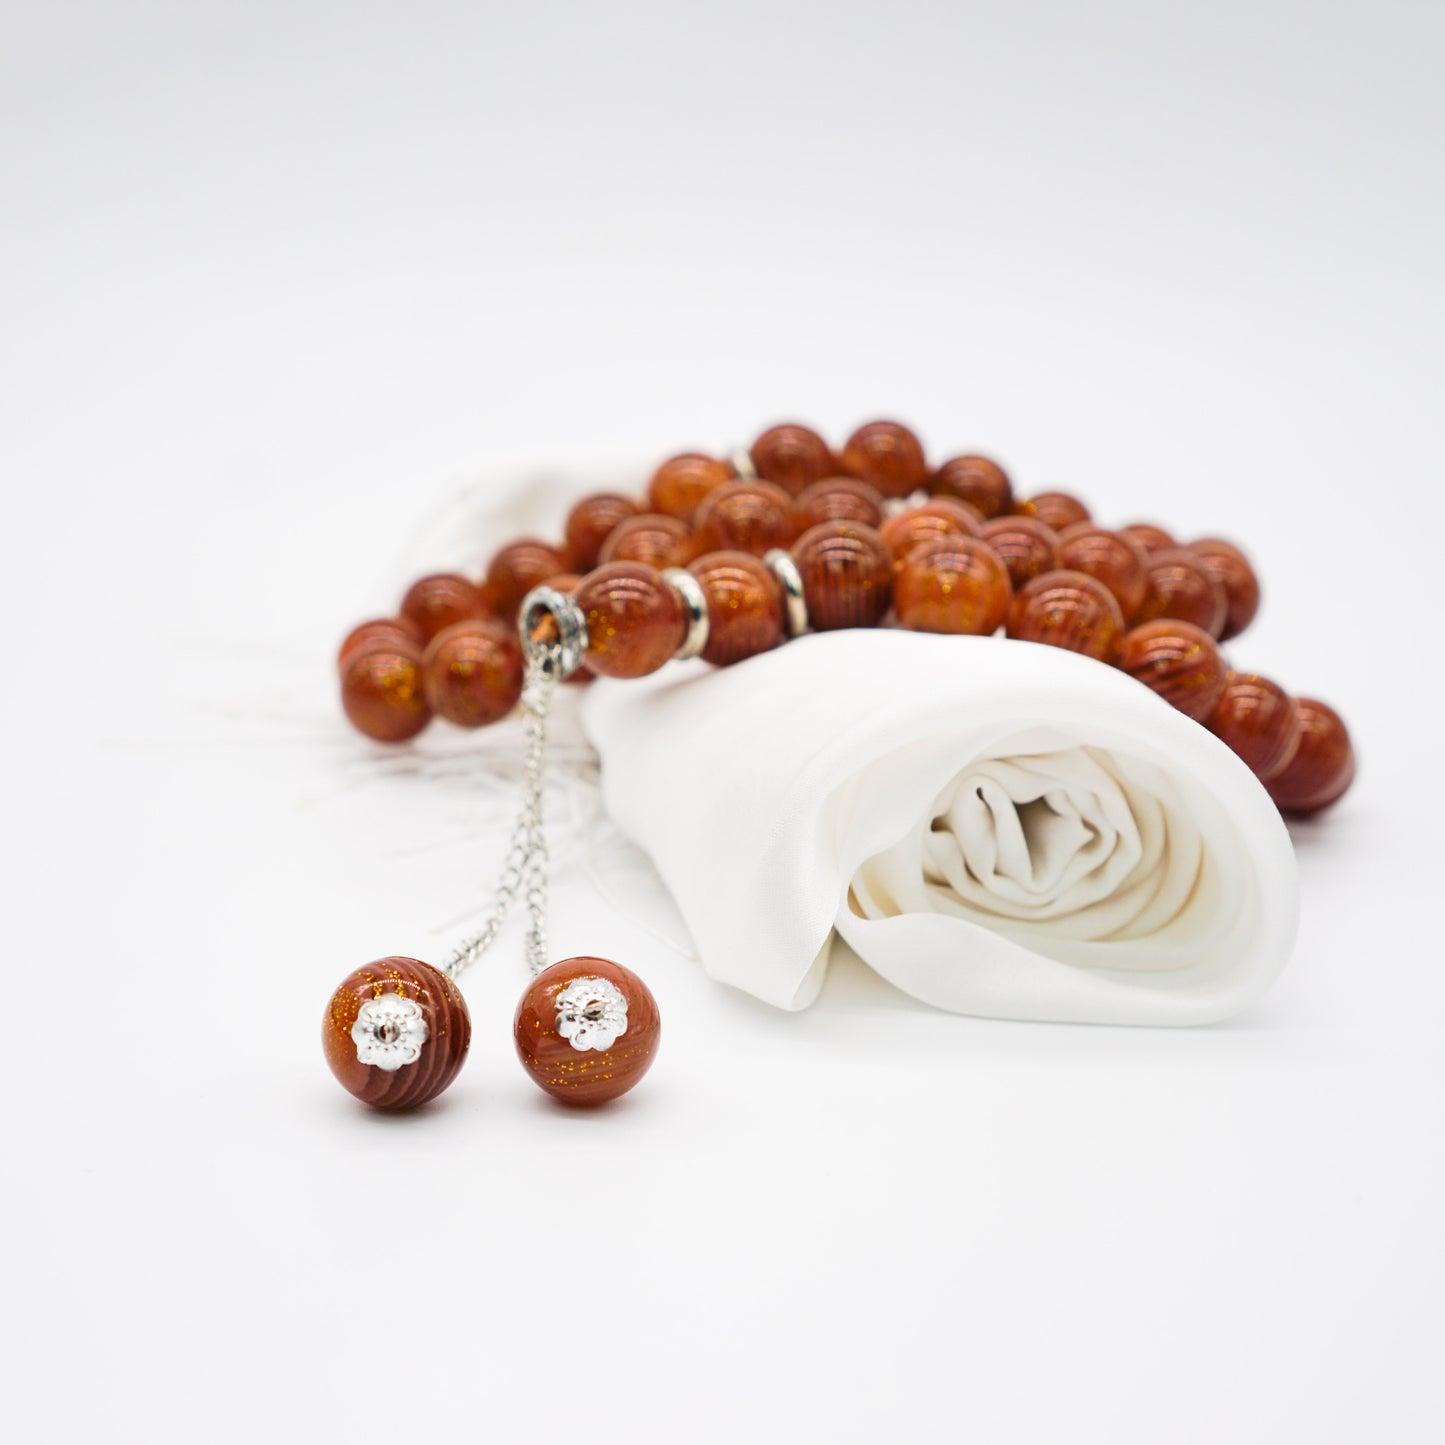 XL Acrylic Prayer Tasbeeh 35 Beads Light Brown